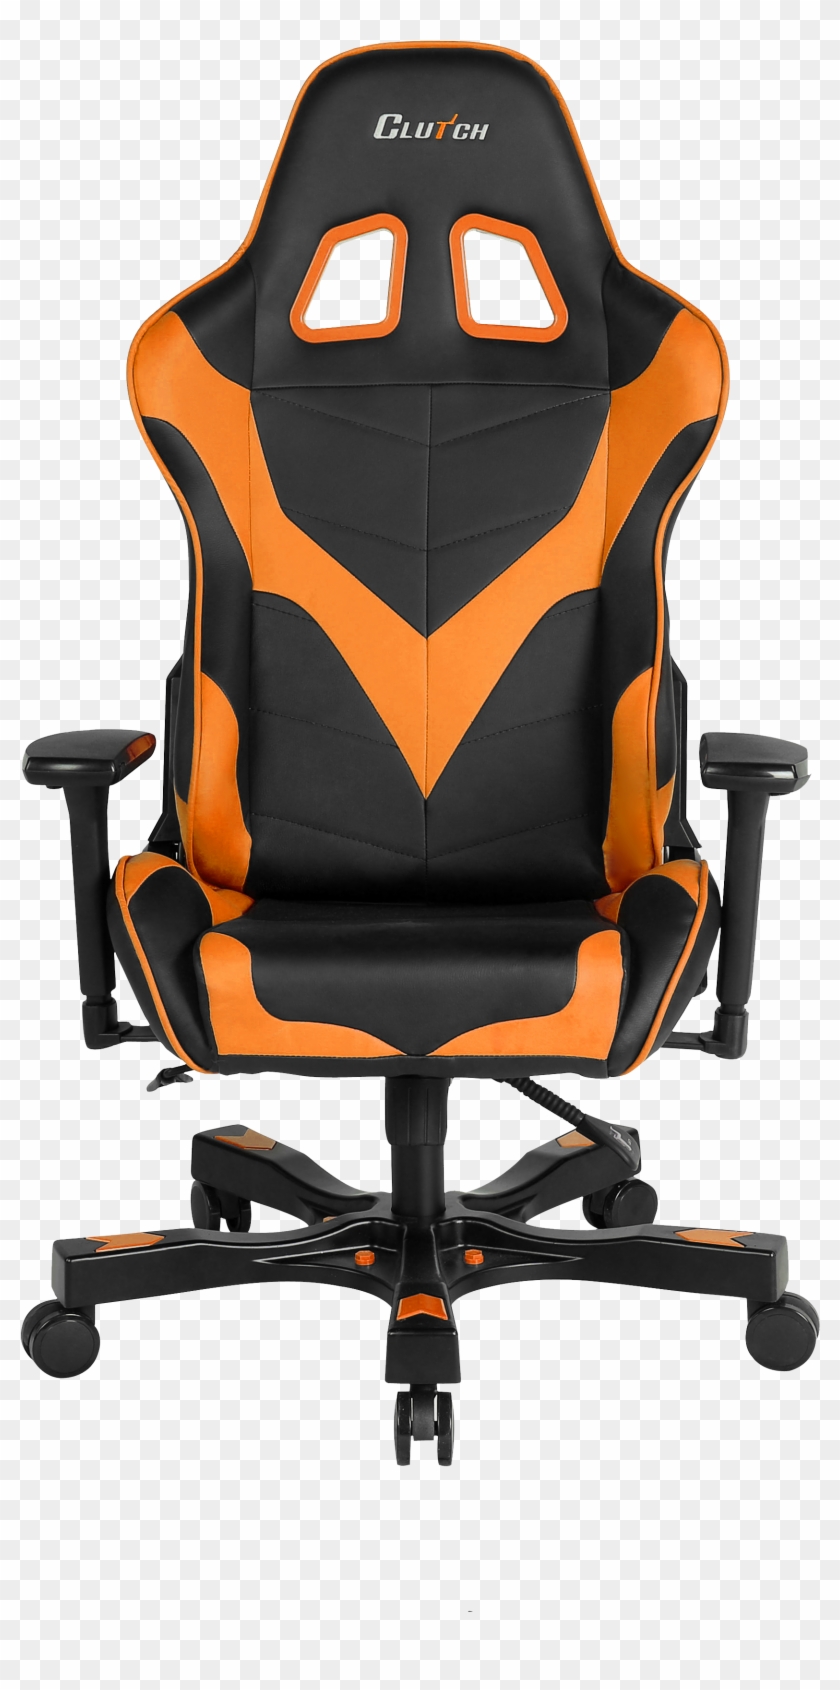 Clutch Chairz Premium Gaming/computer Chair, Black - Clutch Gaming Chair Purple Clipart #5148388